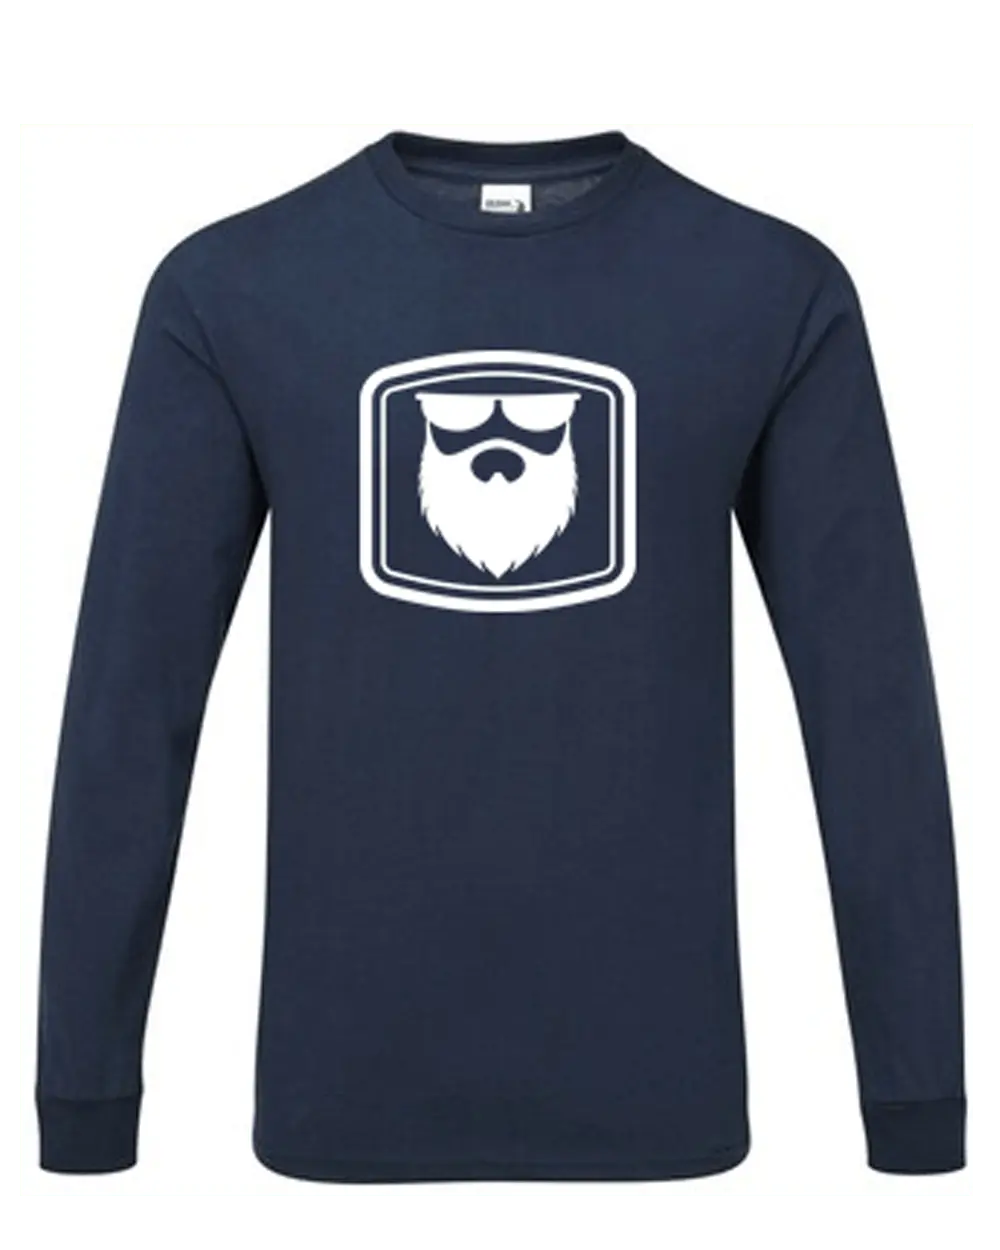 THE OG BEARD 2.0 Navy Blue Long Sleeve Shirt|Long Sleeve Shirt